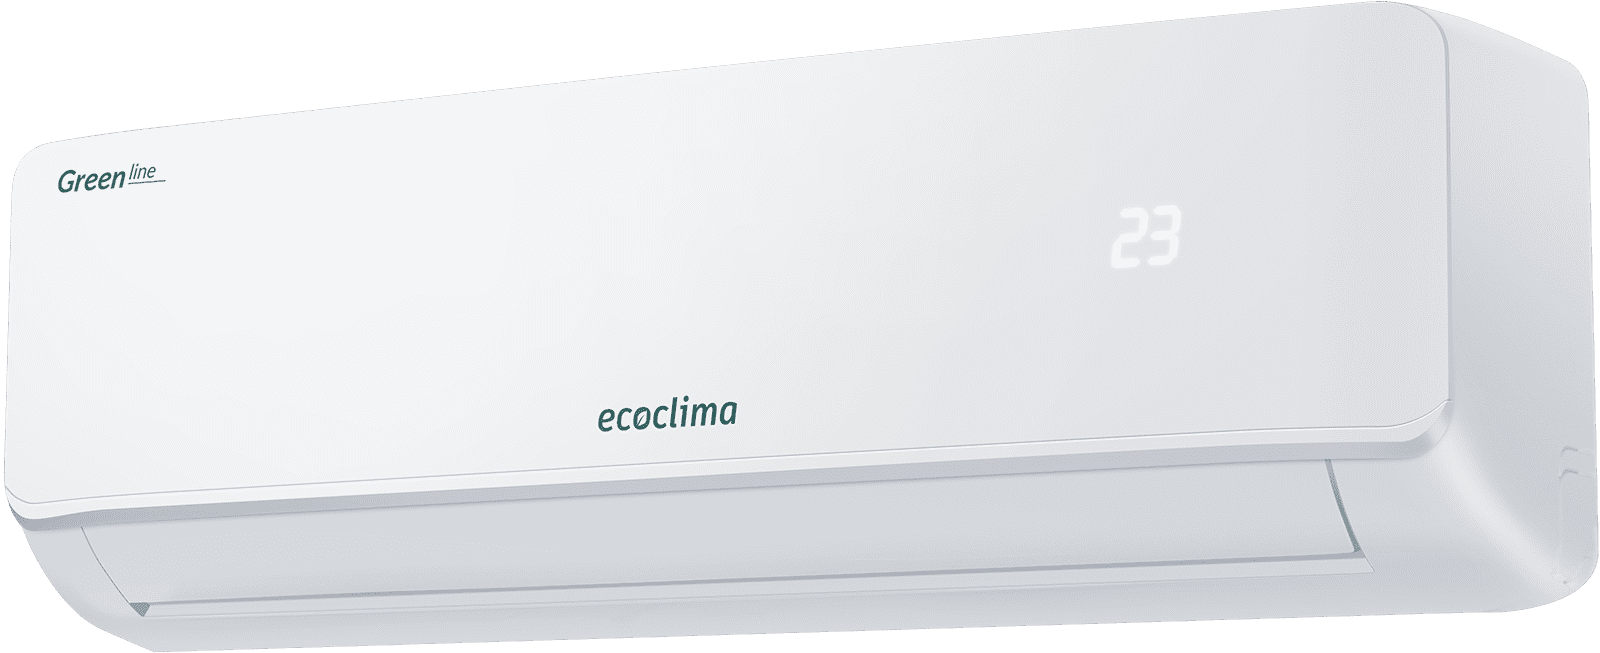 Серия бренда Ecoclima - Wind line Inverter